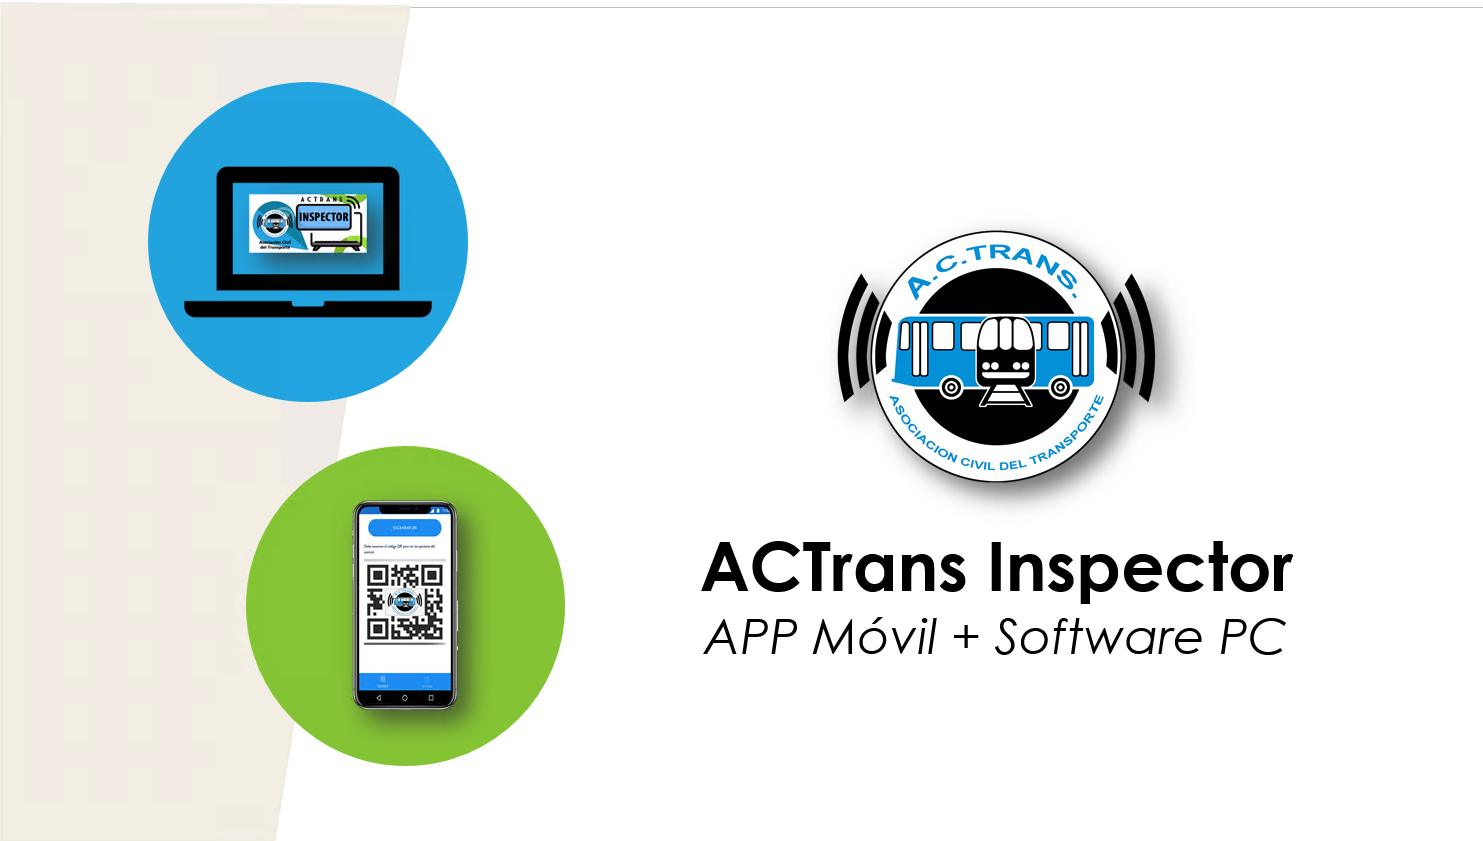 • ACTrans Inspector APP + Software PC